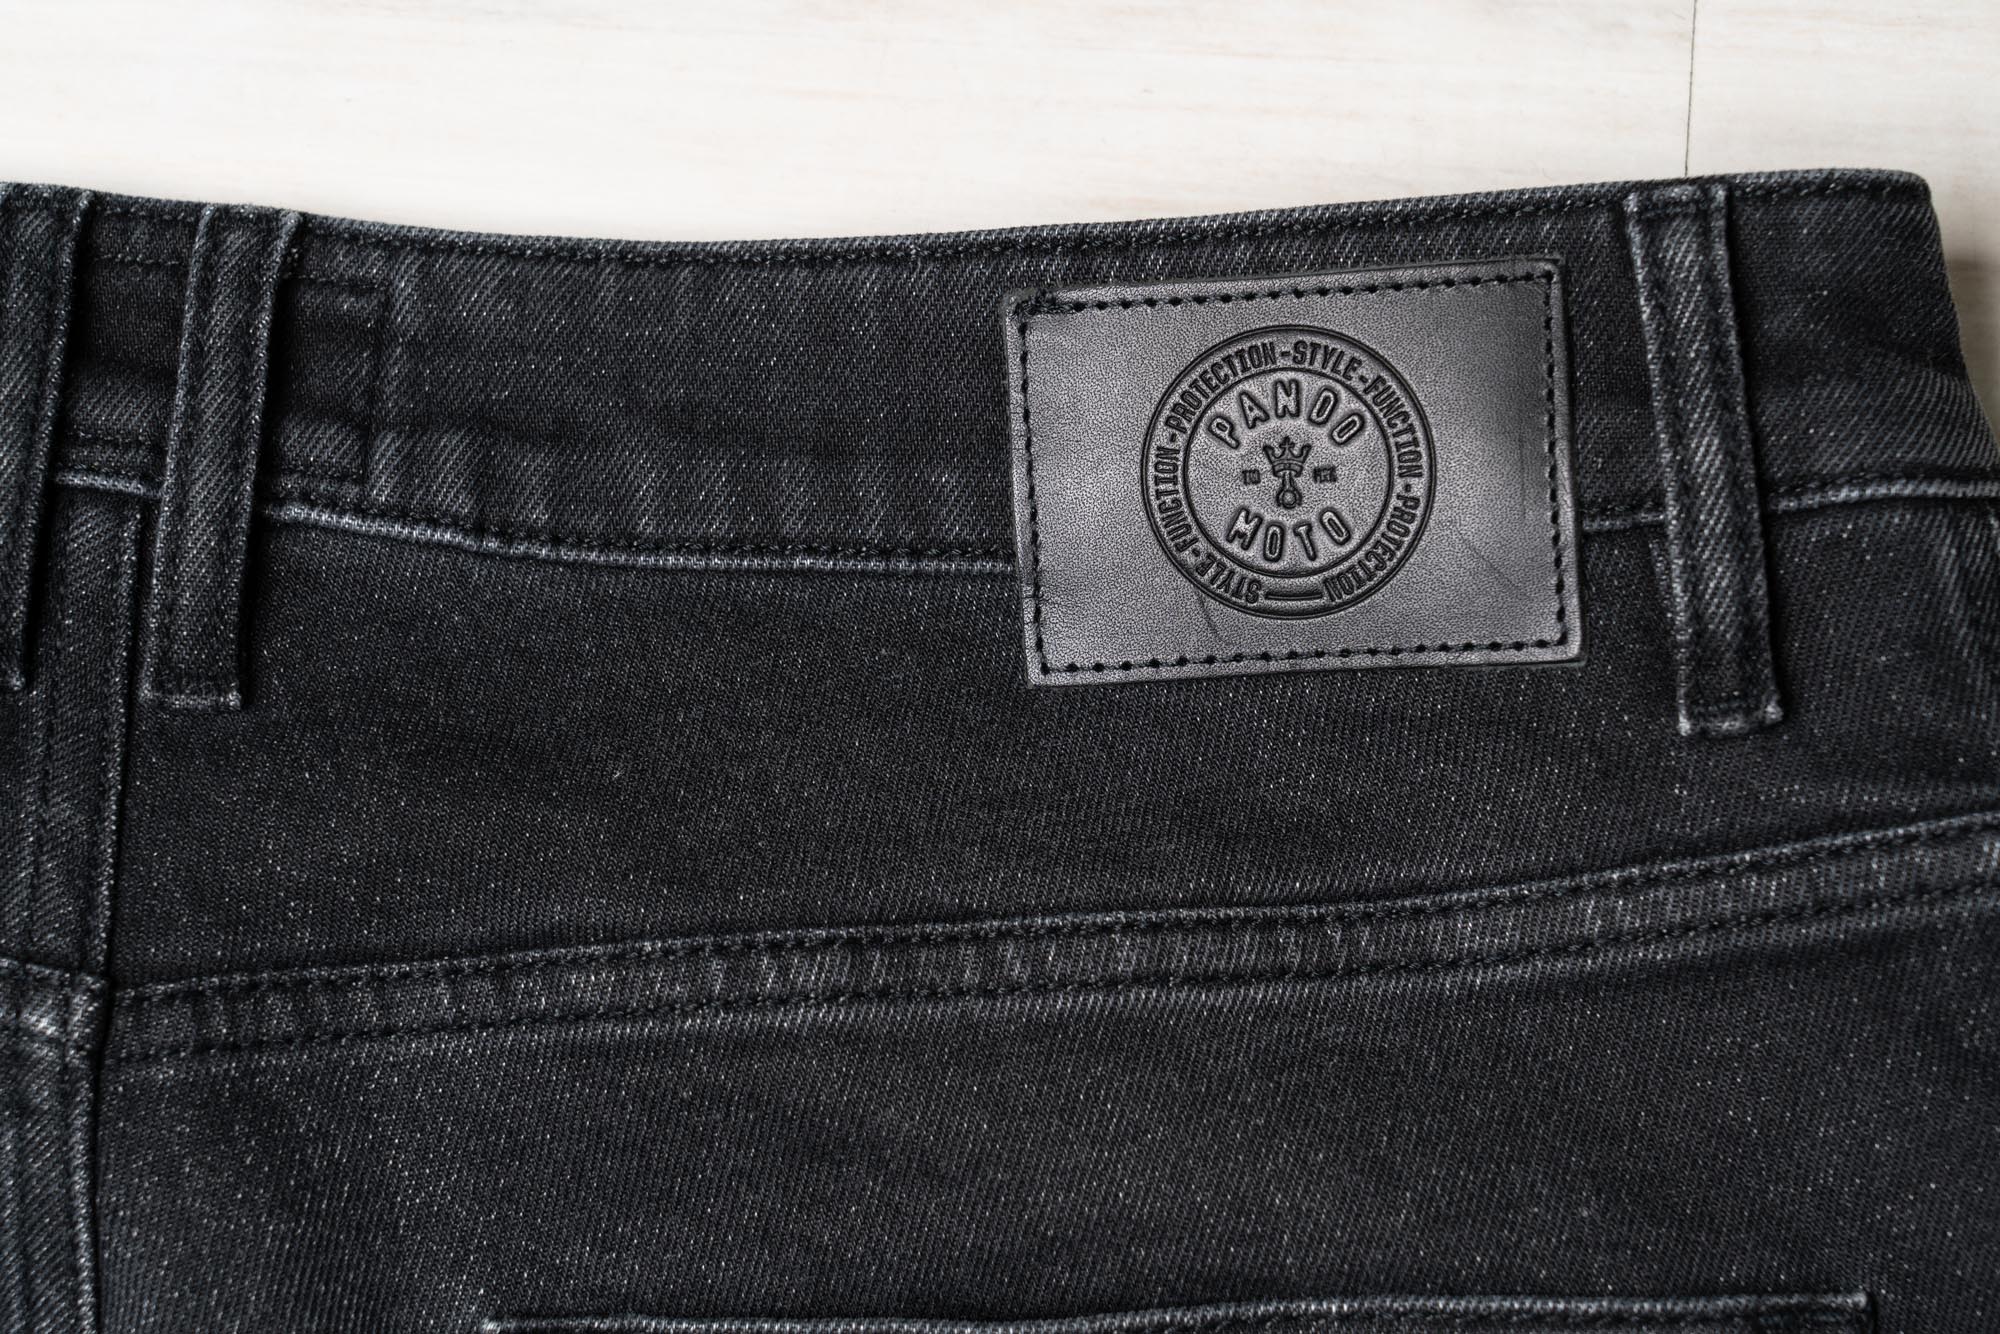 Pando Moto leather emblem on rear pocket